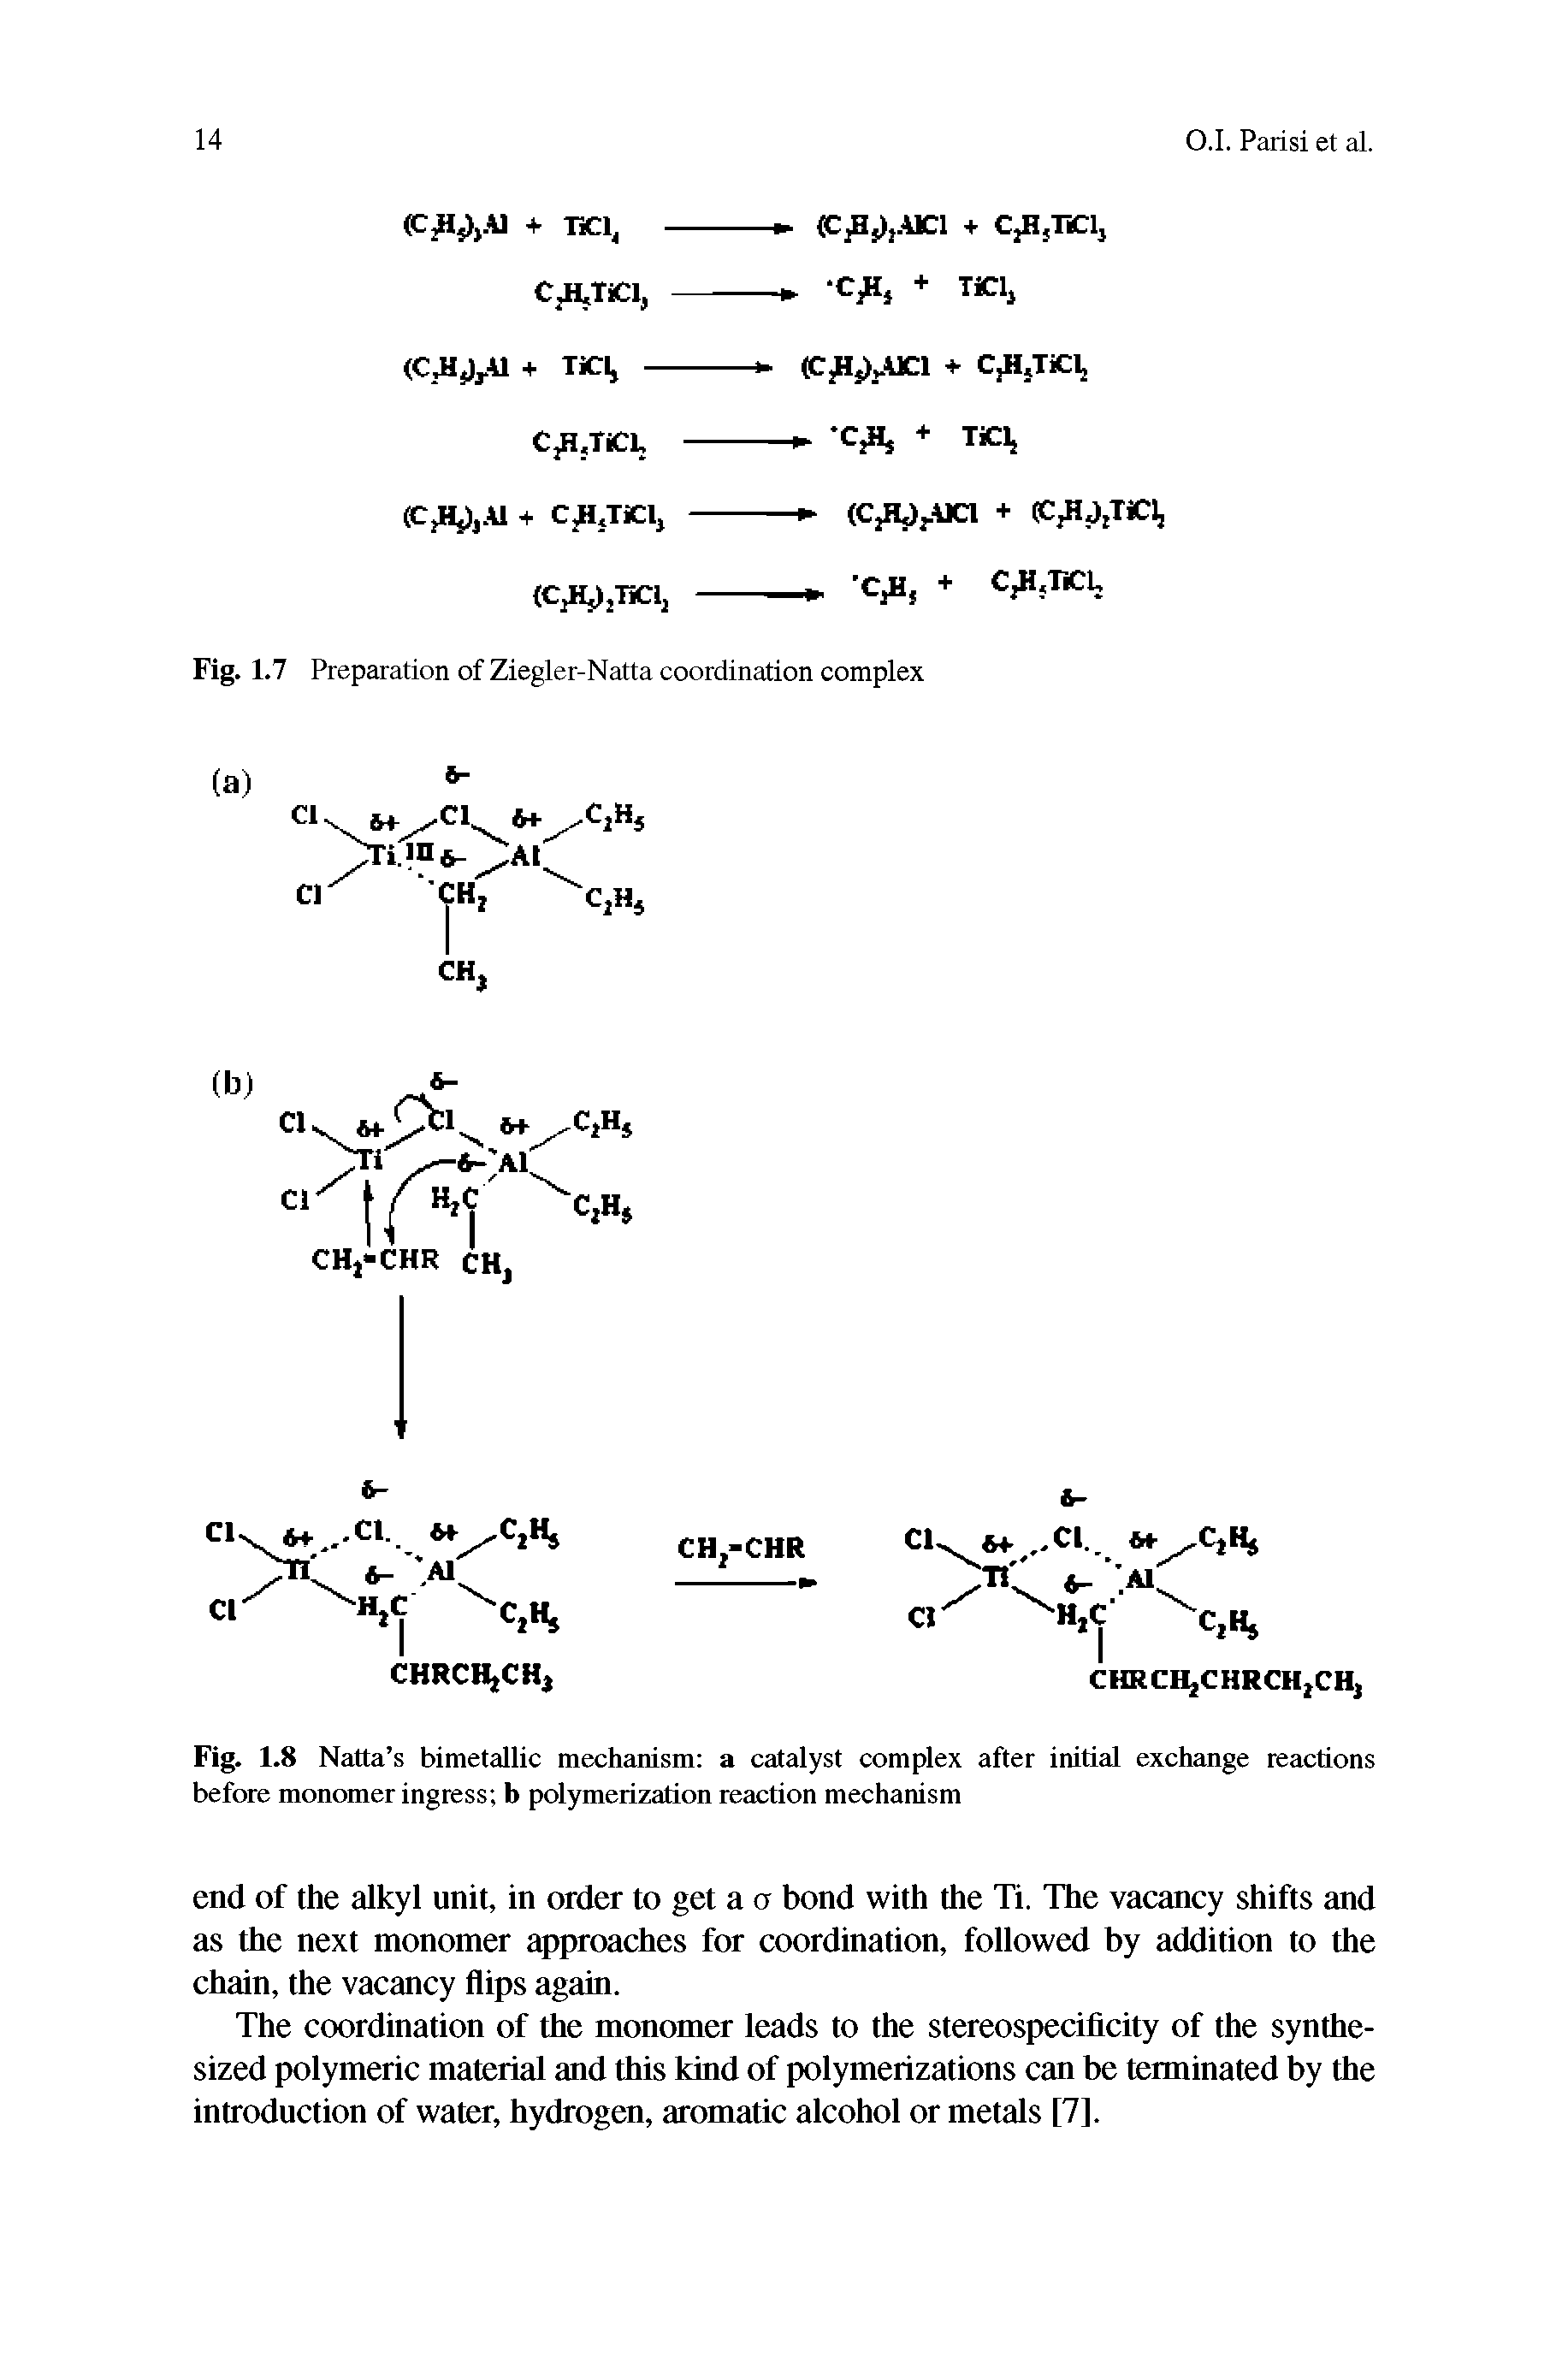 Fig. 1.8 Natta s bimetallic mechanism a catalyst complex after initial exchange reactions before monomer ingress b polymerization reaction mechanism...